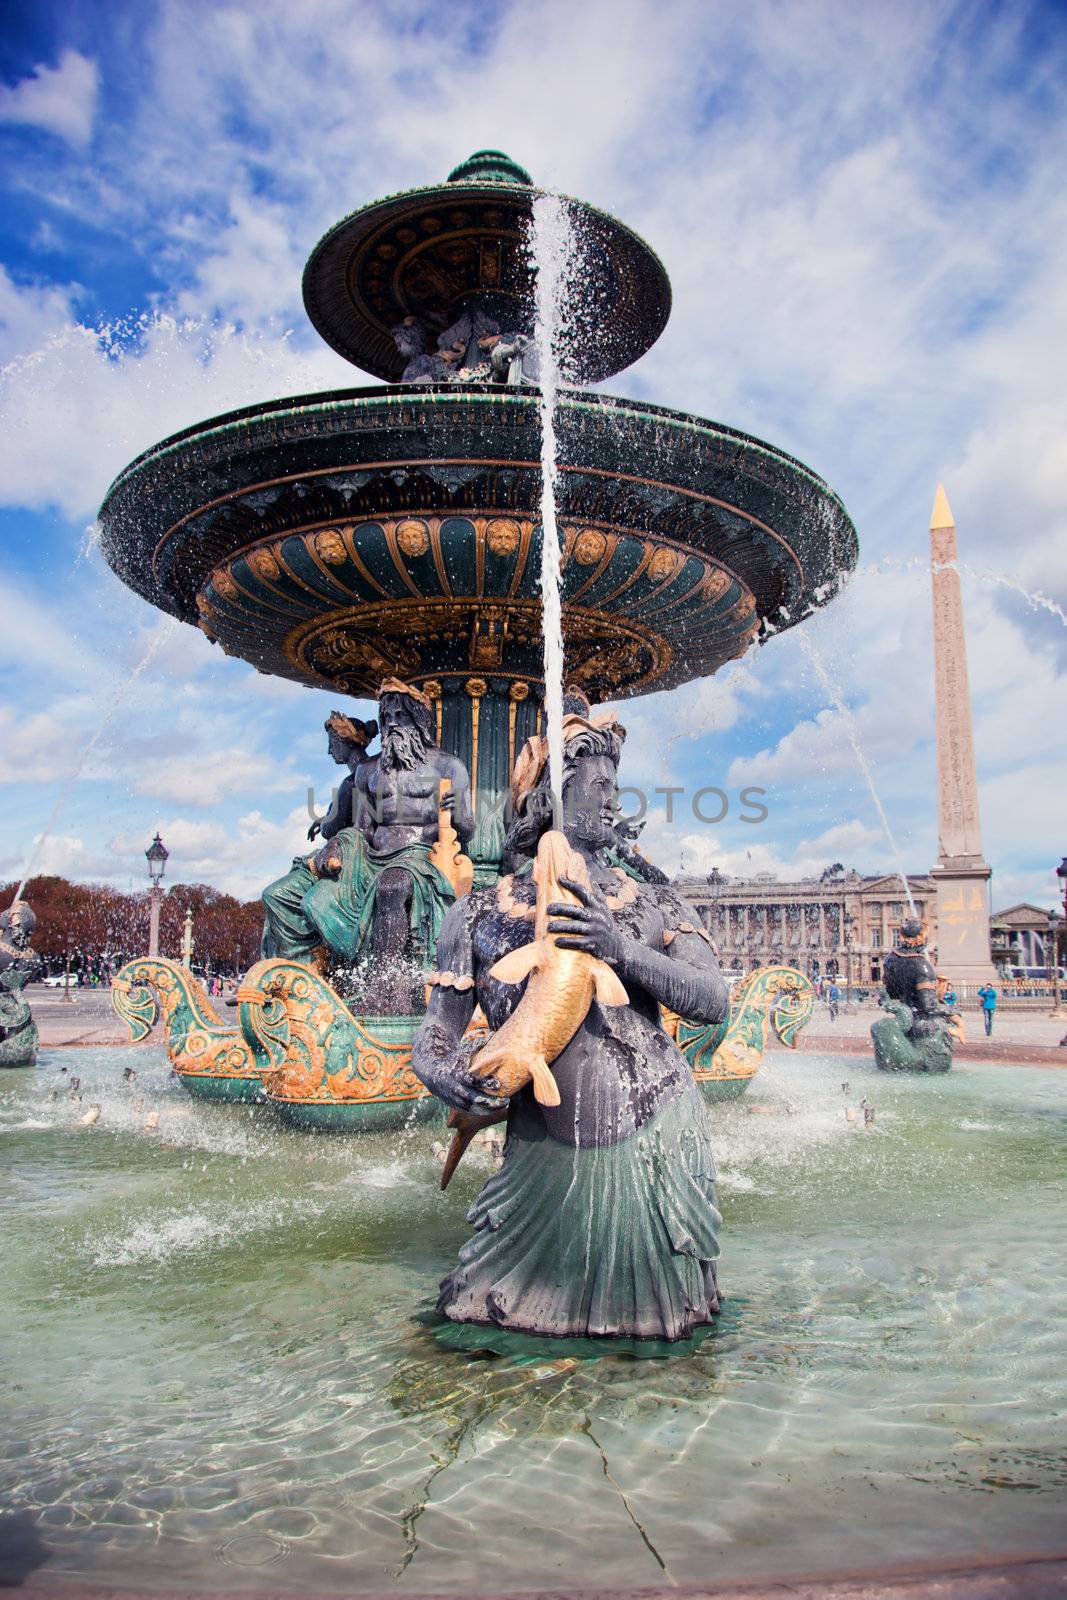 Fountain in Jardin des Tuileries, next to Louvre, Paris, France.